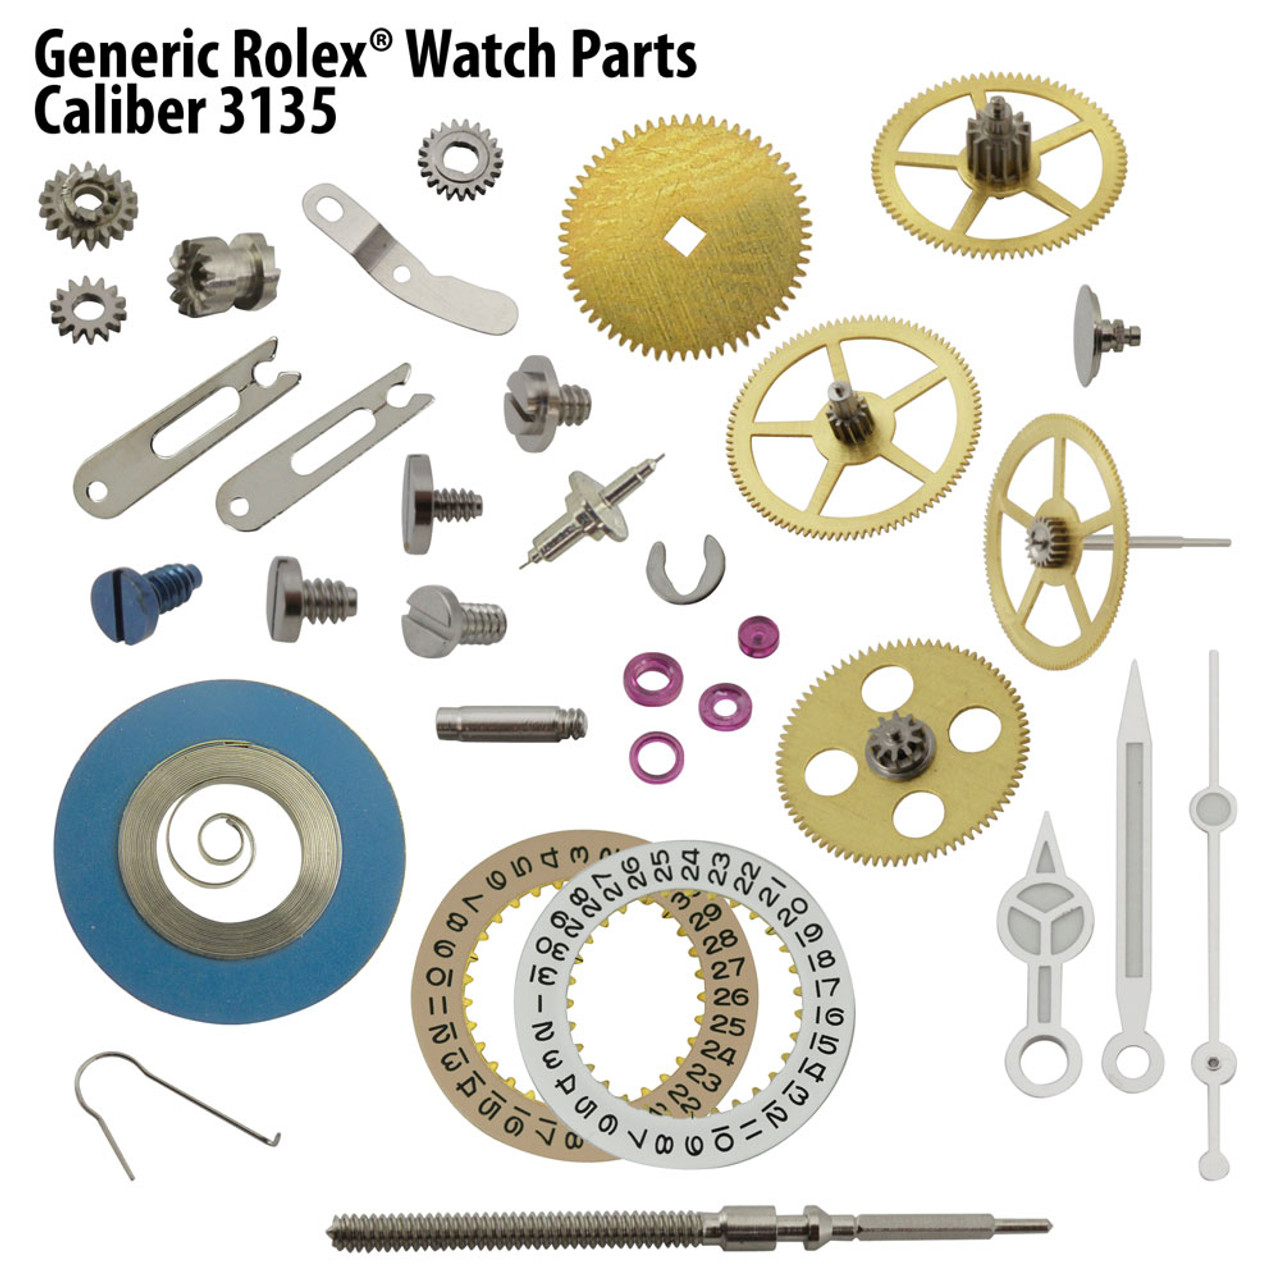 Parts for a Rolex® Cal. 3135